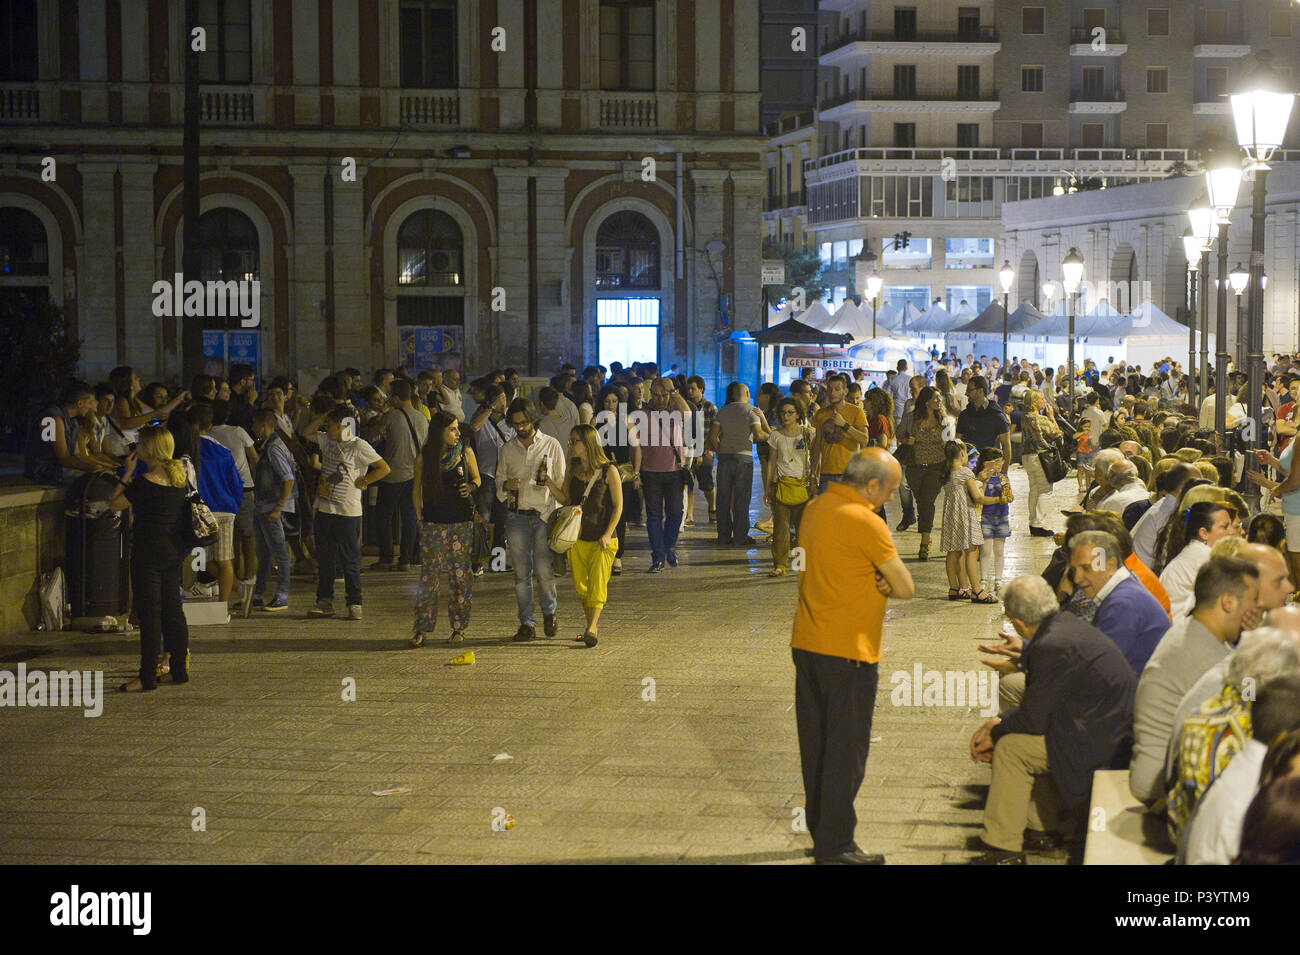 Europe, Italy, Apulia, Bari, Mercantile square at night Stock Photo